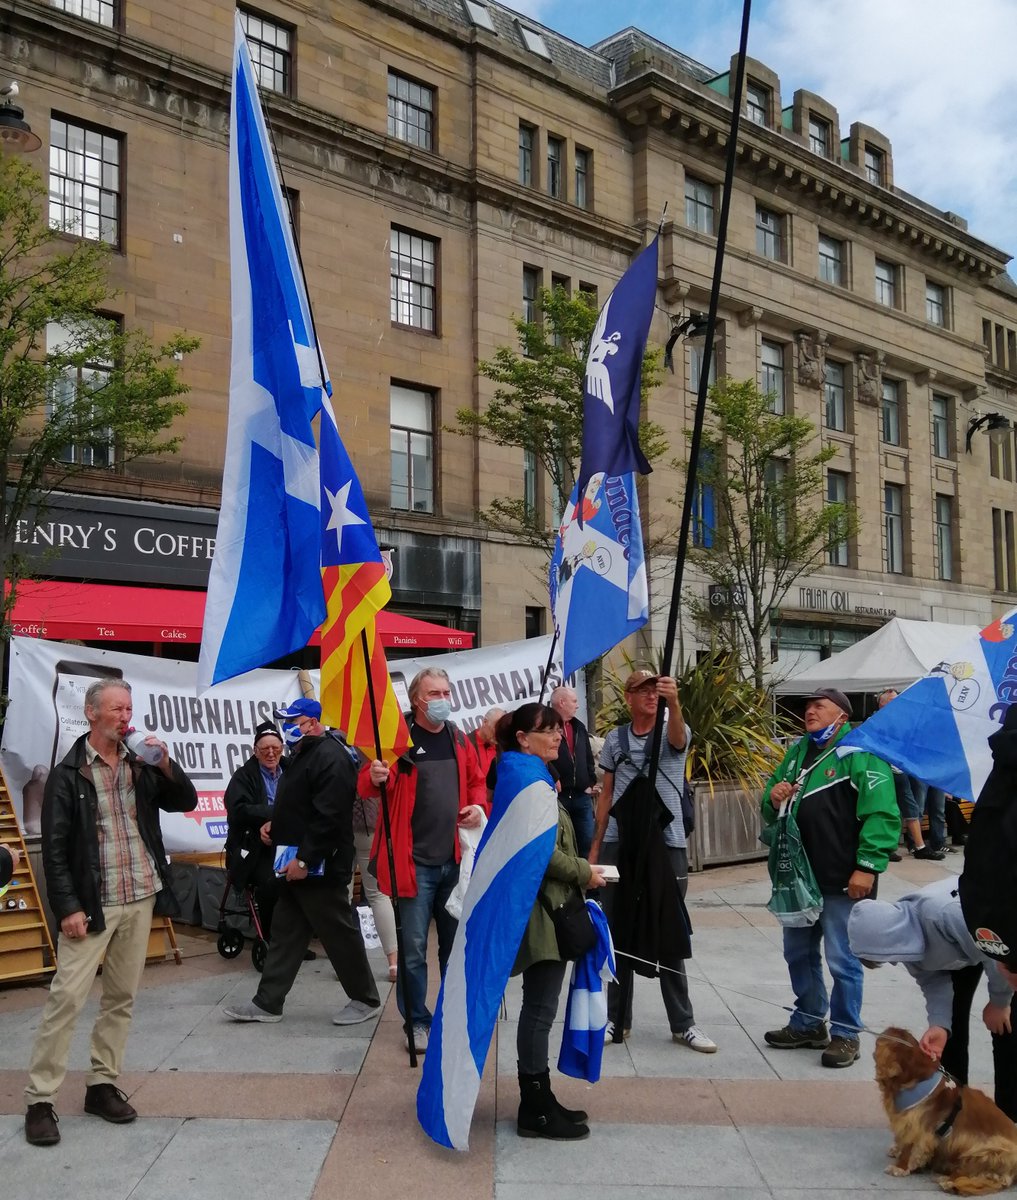 Scotland will RESIST. 
#NoExtradition
Dundee #AUOB 31/07/21
#TruthIsOurPower
#FreeAssange 
#IStandWithCraigMurray